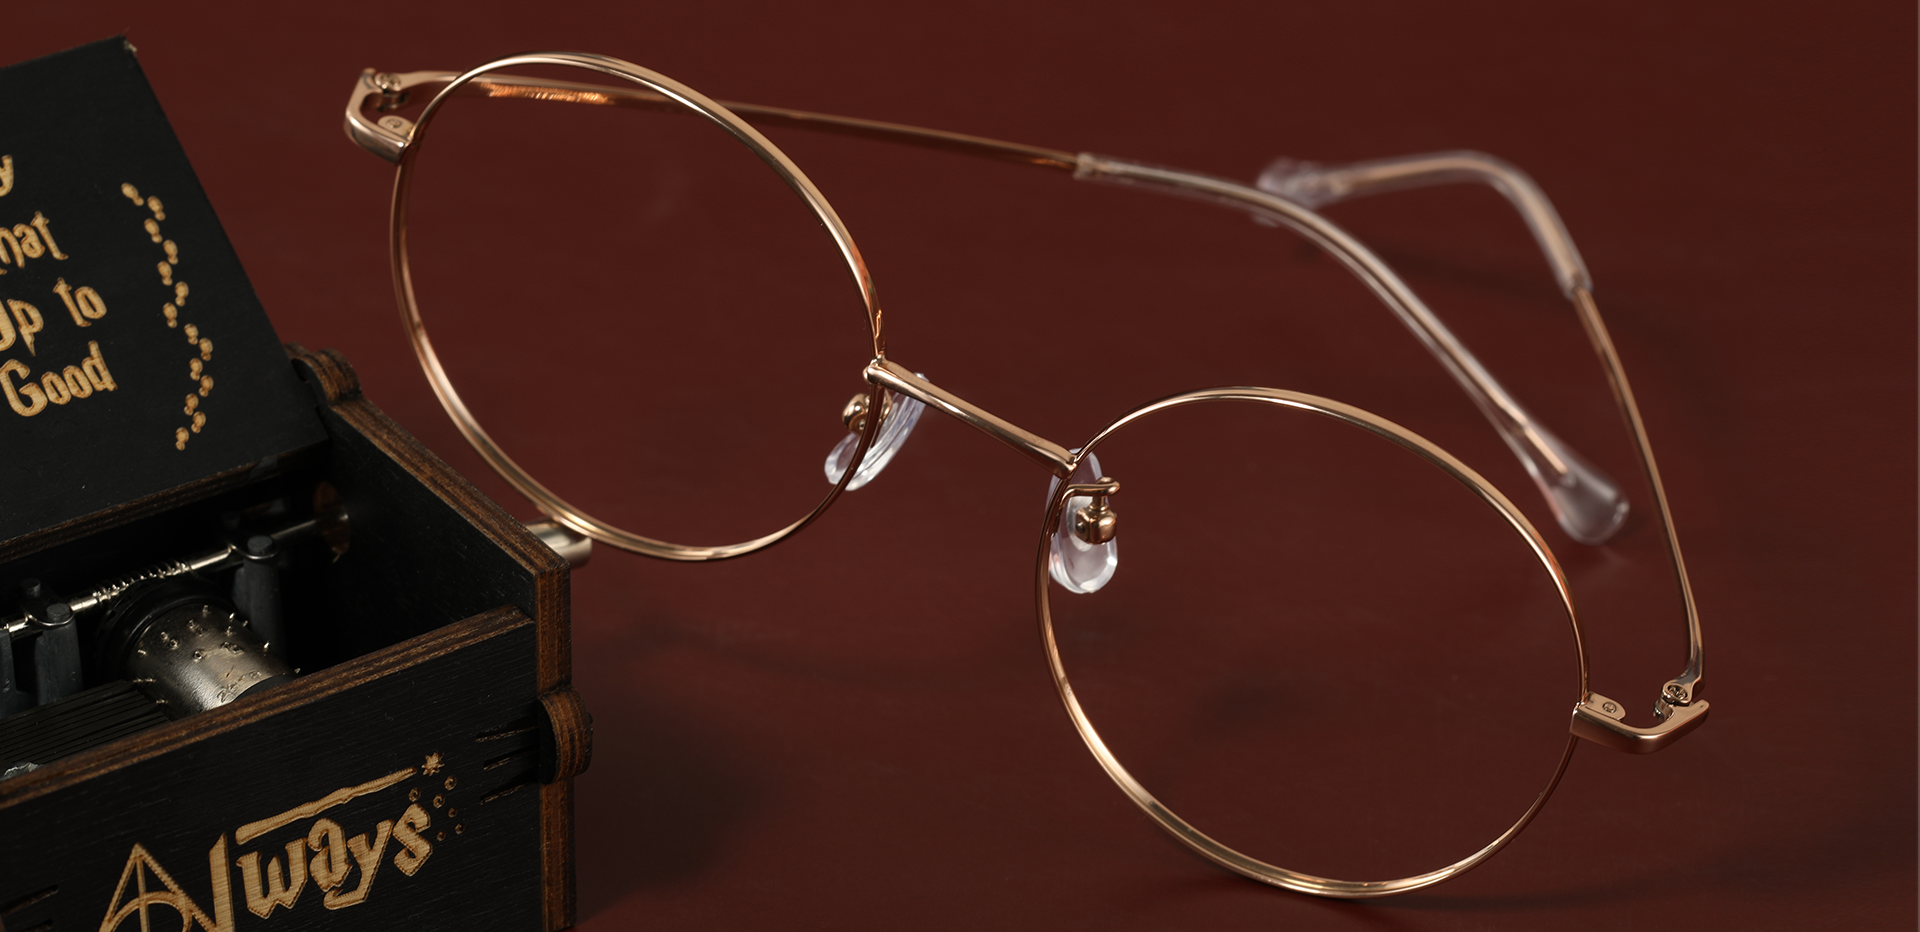 Altoona Round Prescription Glasses - Gold